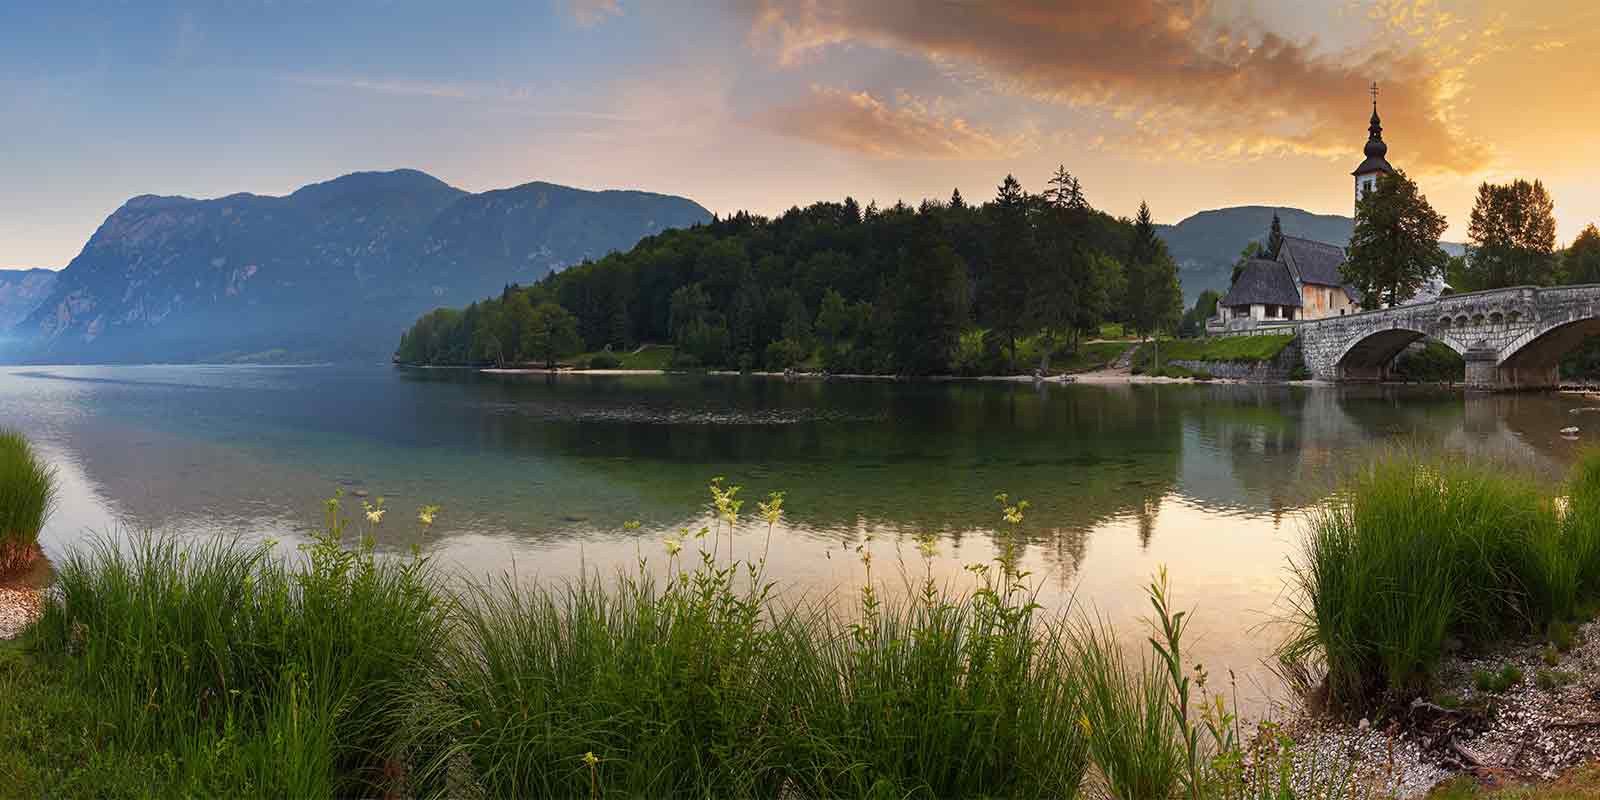 wilderness travel slovenia